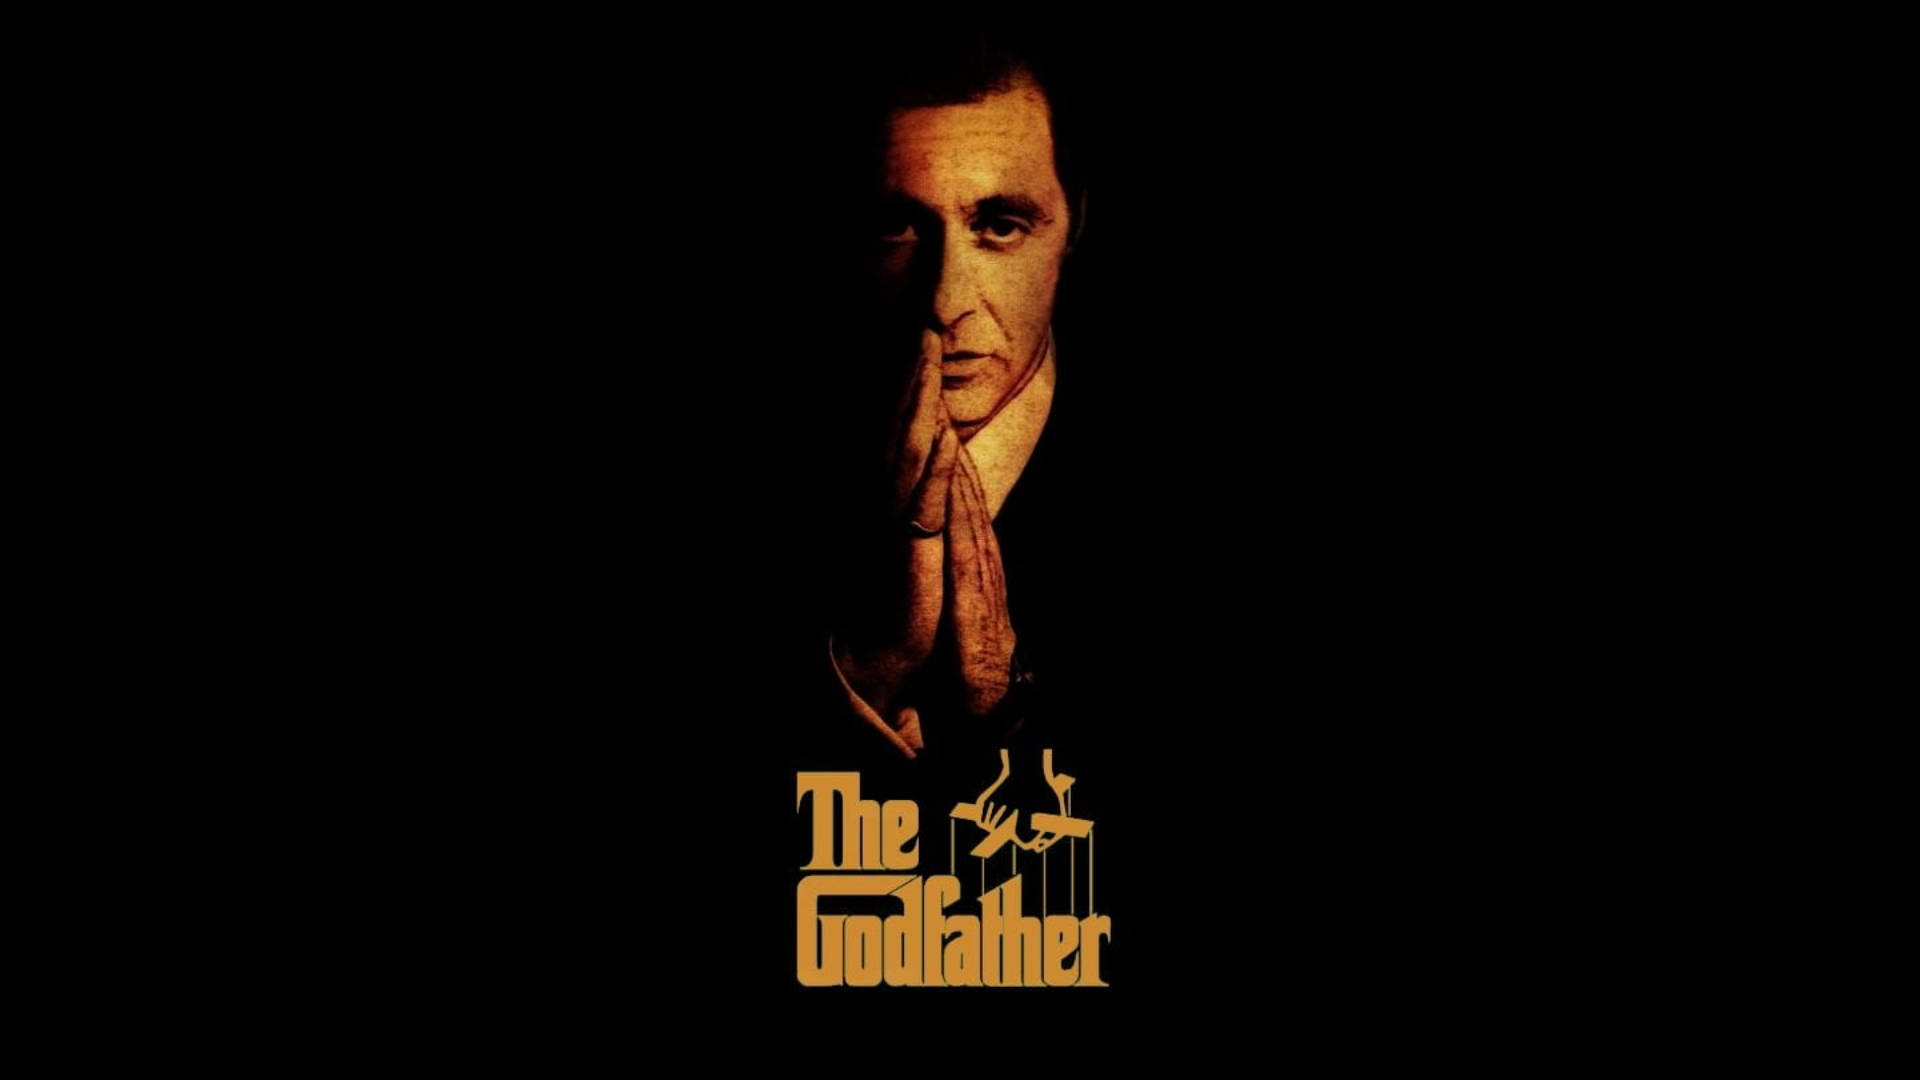 The Godfather Vintage Poster Background